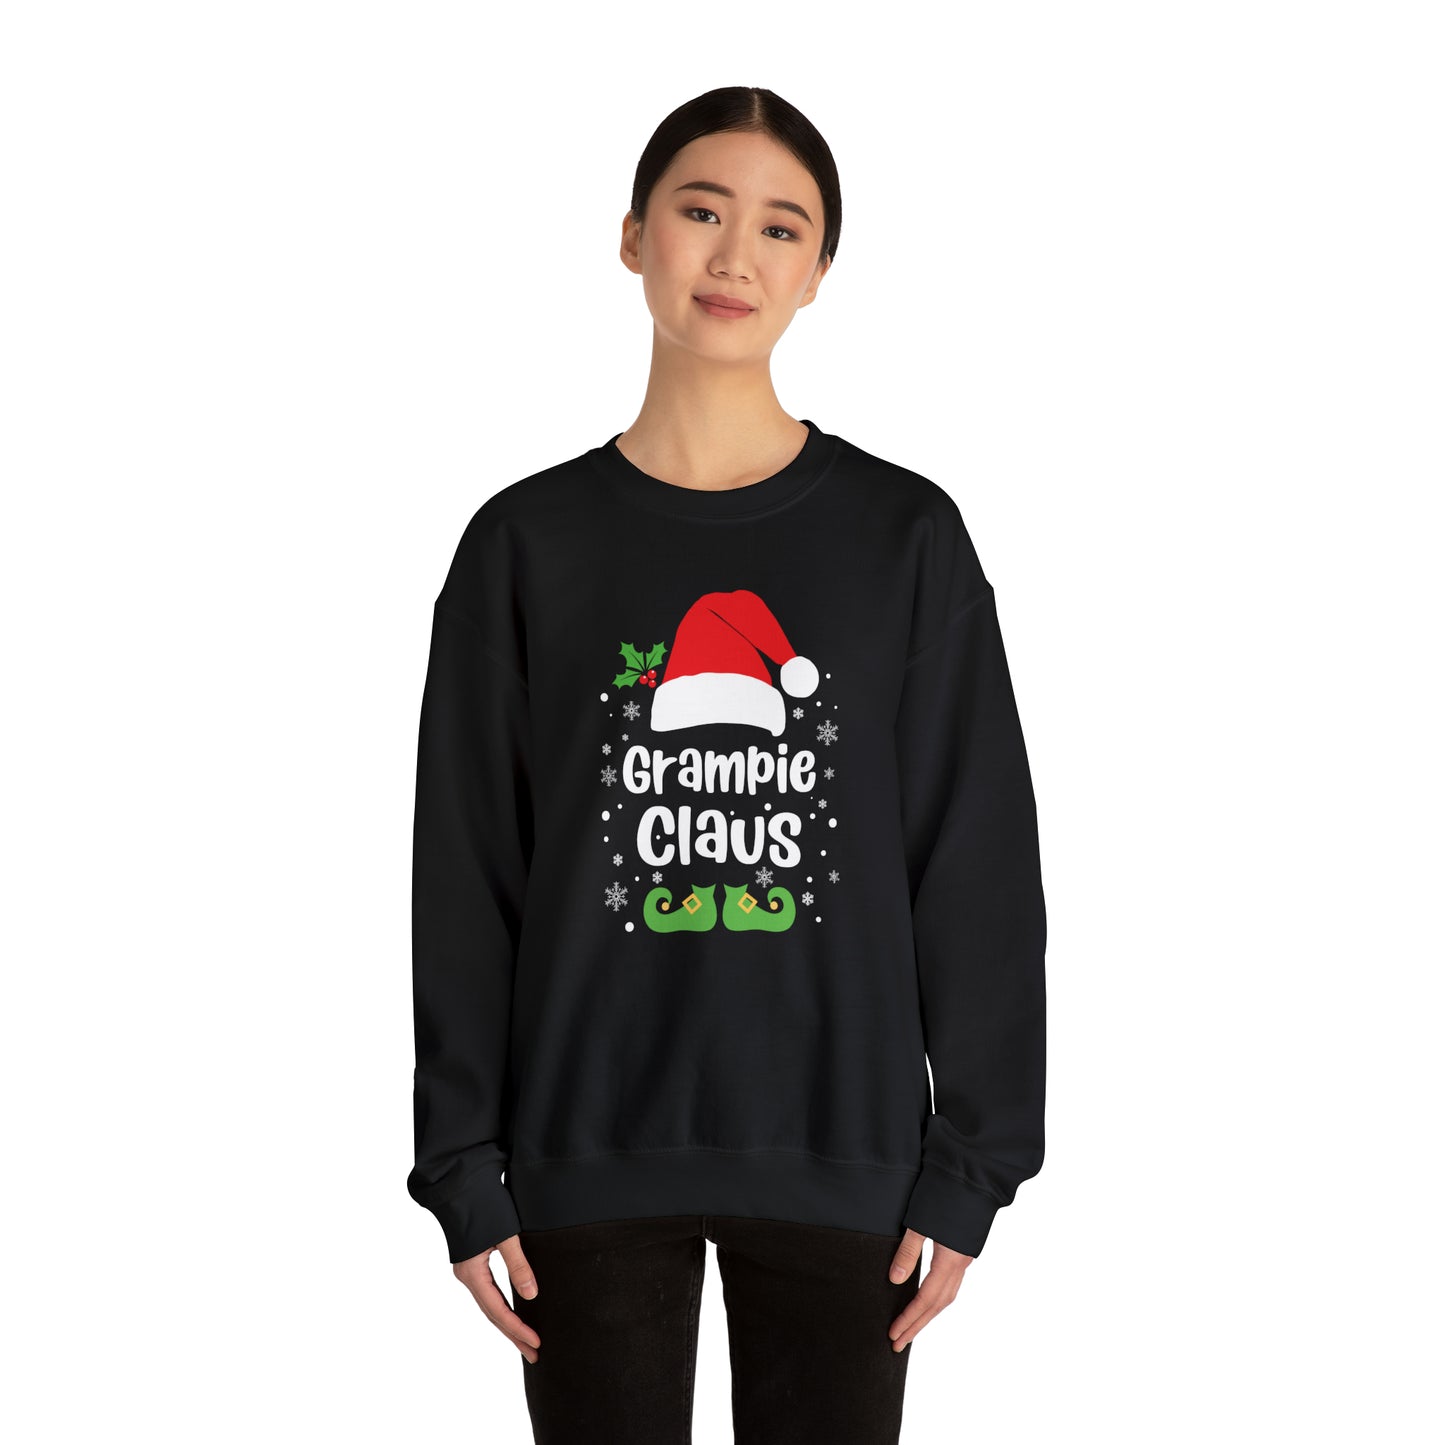 Grampie Claus Sweatshirt, Christmas Sweatshirt, Santa Sweatshirt, Gramps